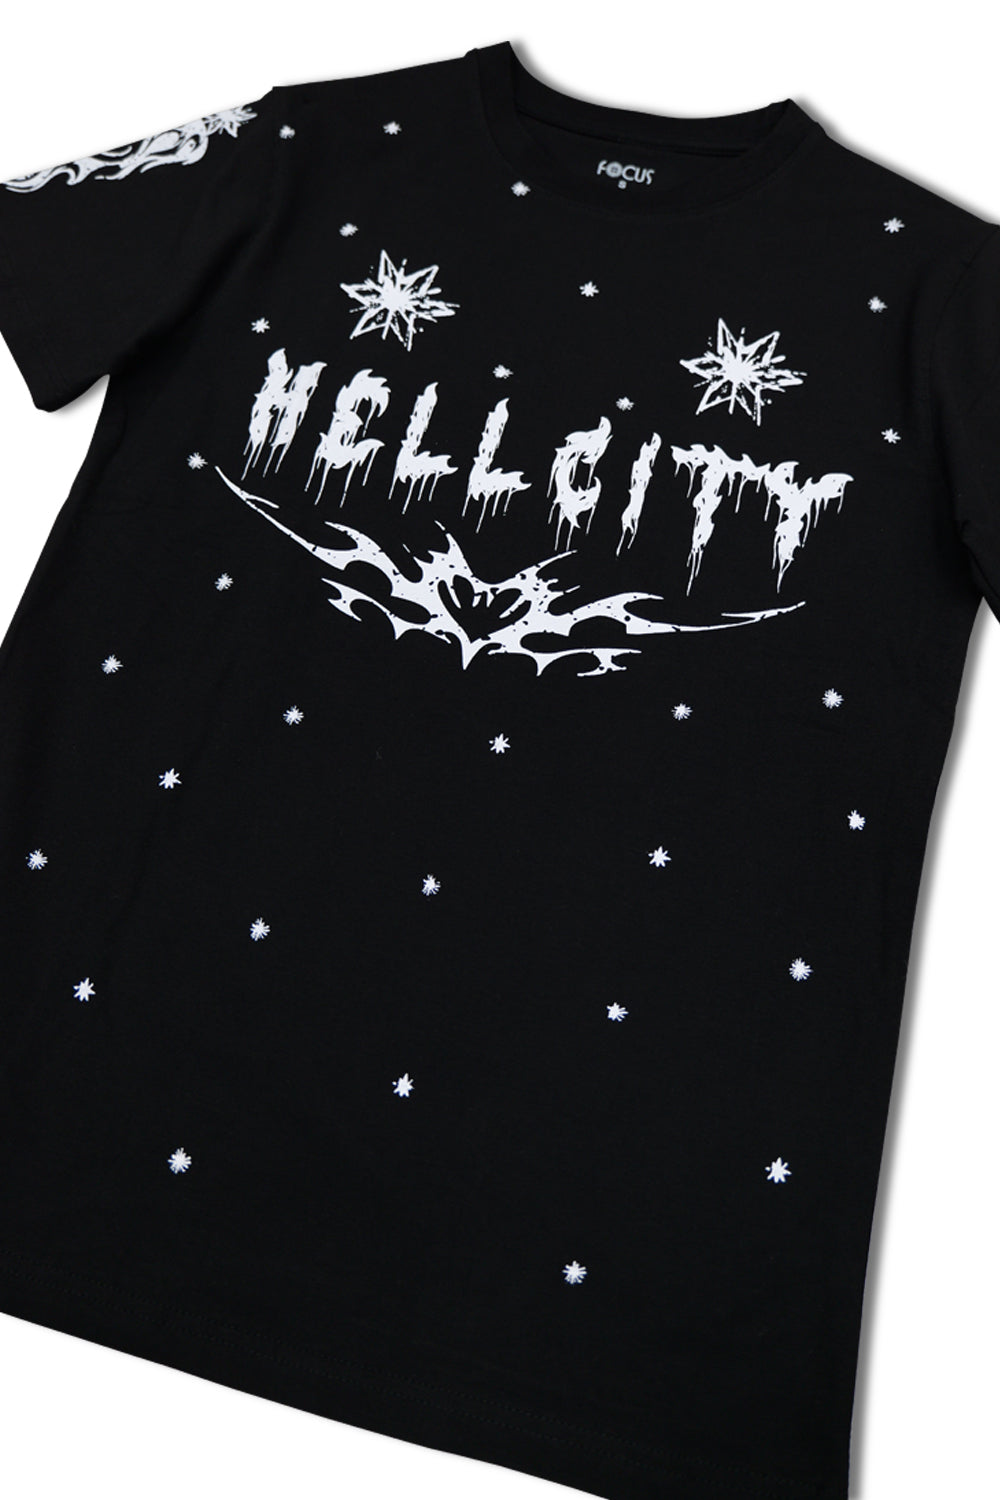 Focus Hell City Black T-Shirt 